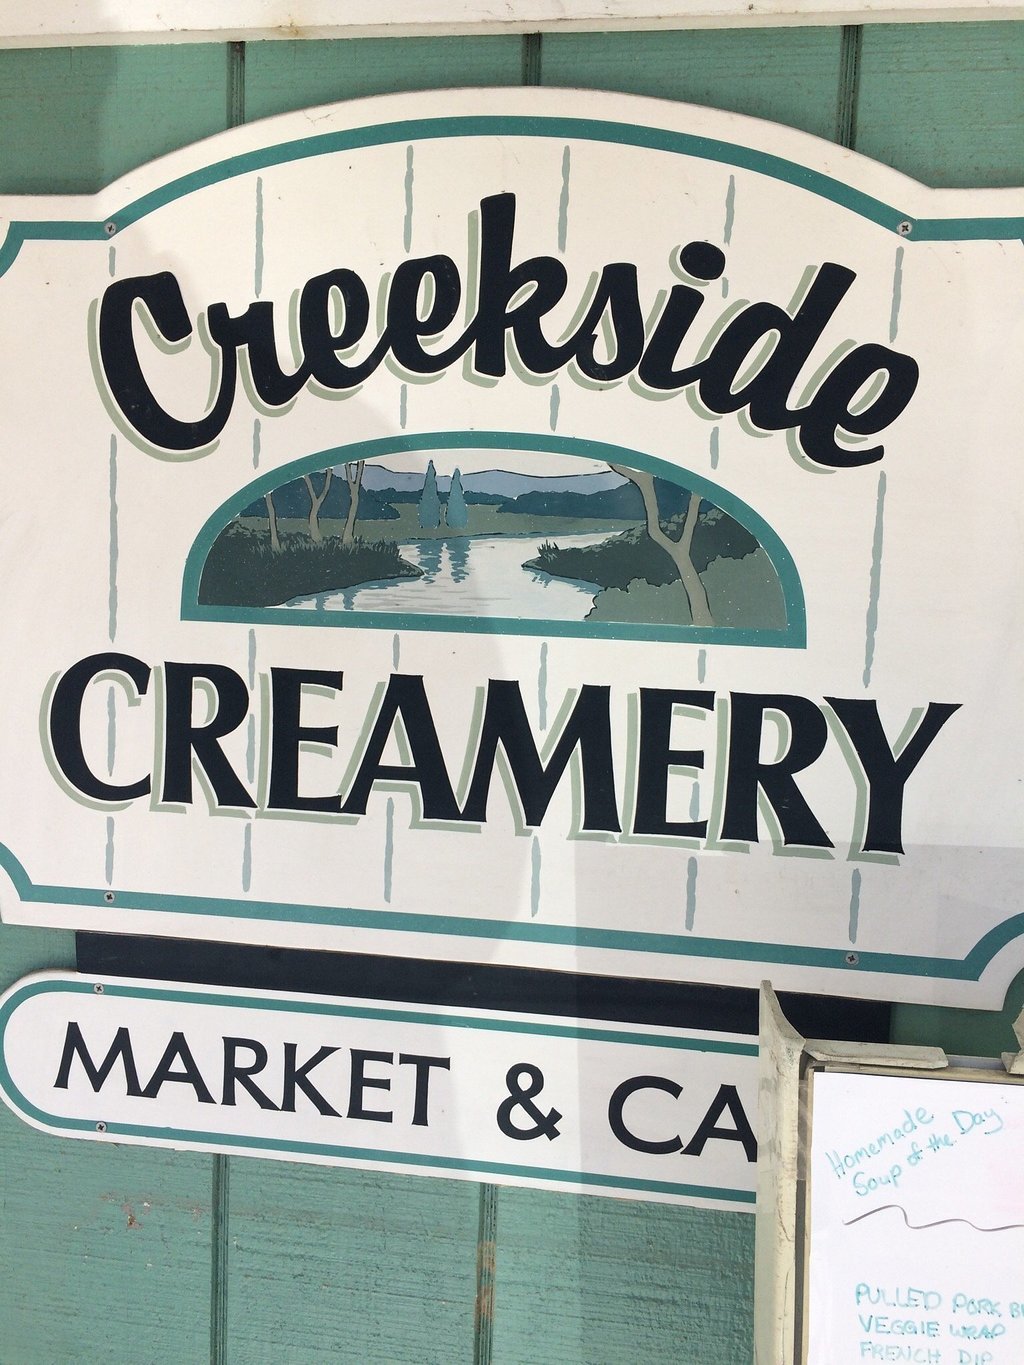 Creekside Creamery Market & Cafe